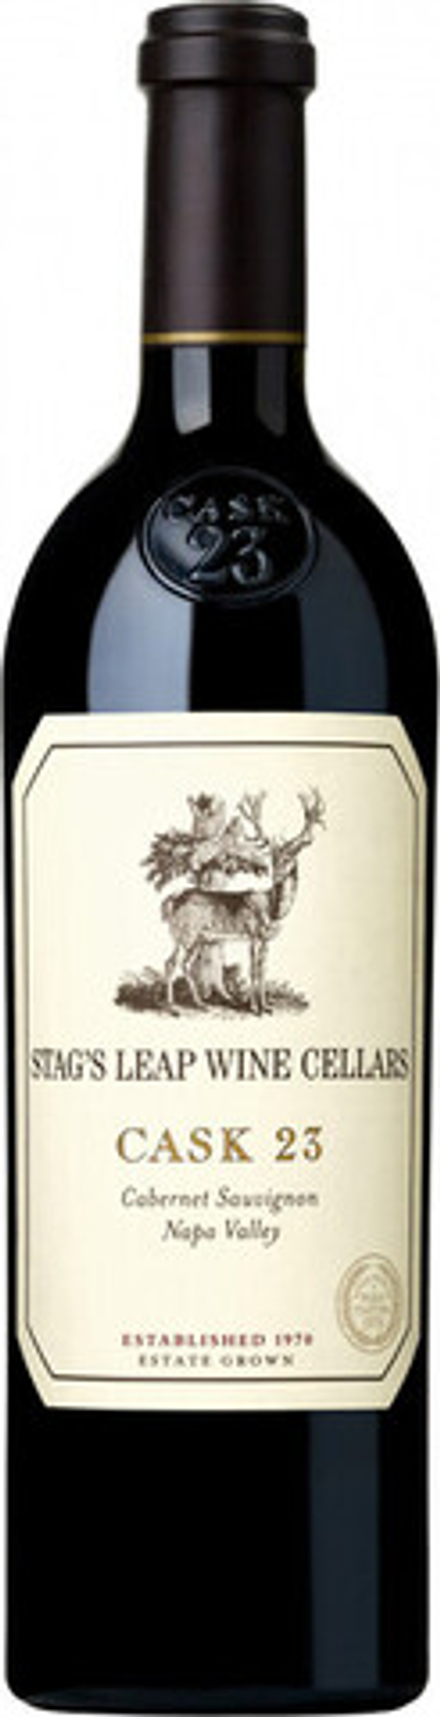 Вино Stag's Leap Wine Cellars Cask 23 Cabernet Sauvignon, 0,75 л.